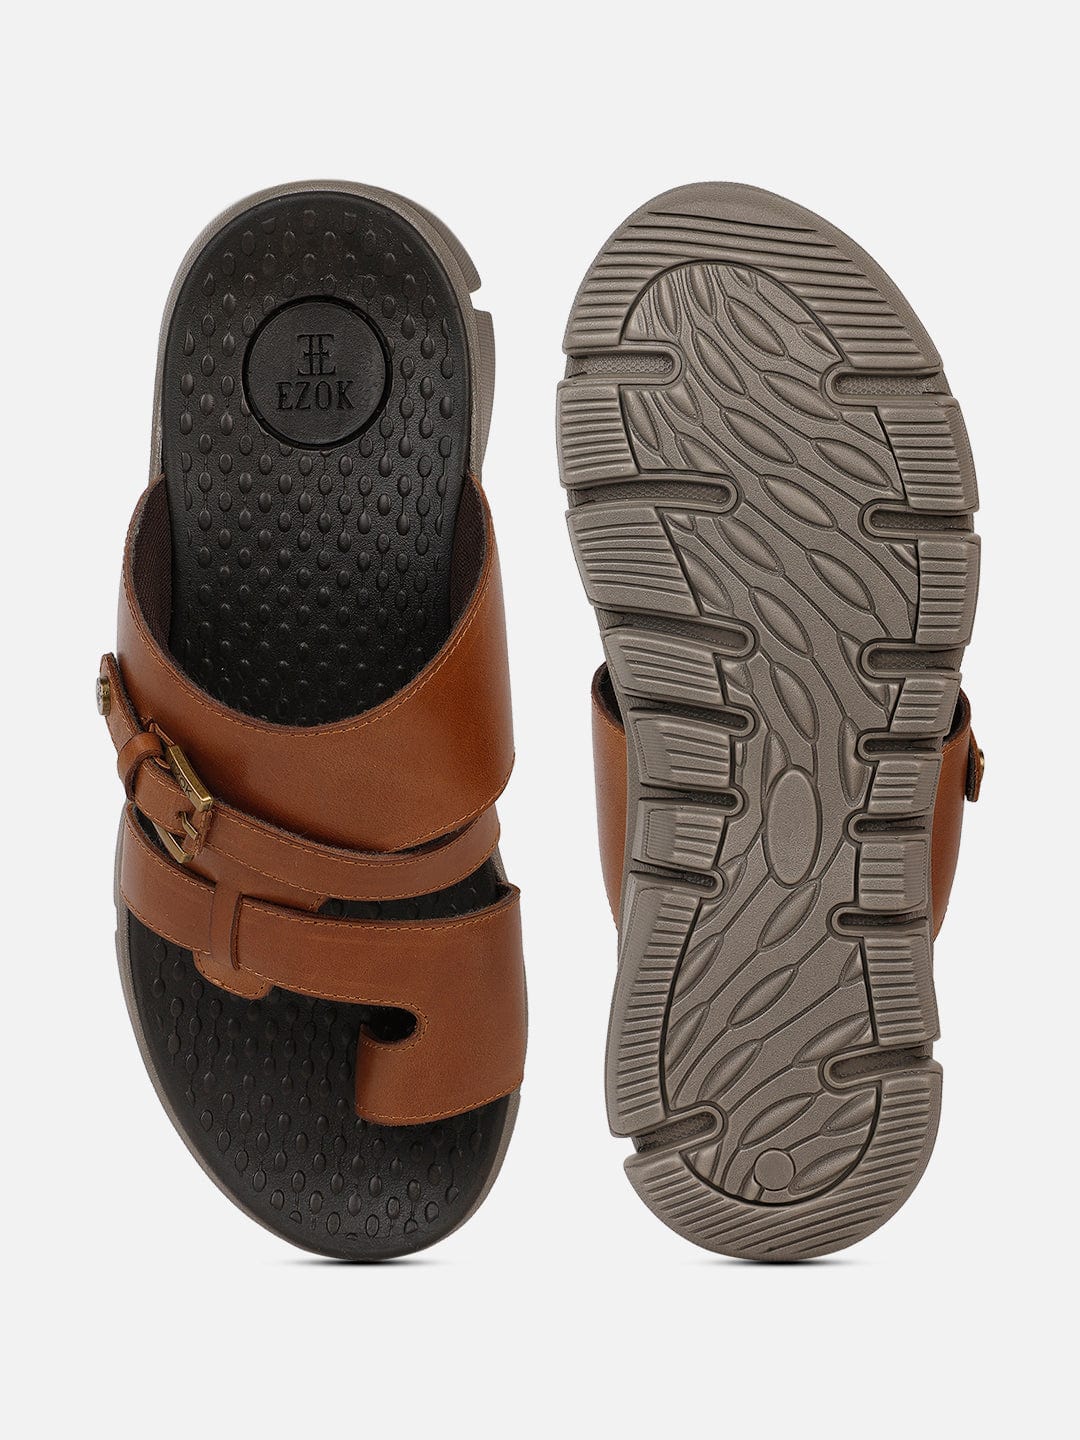 Leather sandal for men (Tan)